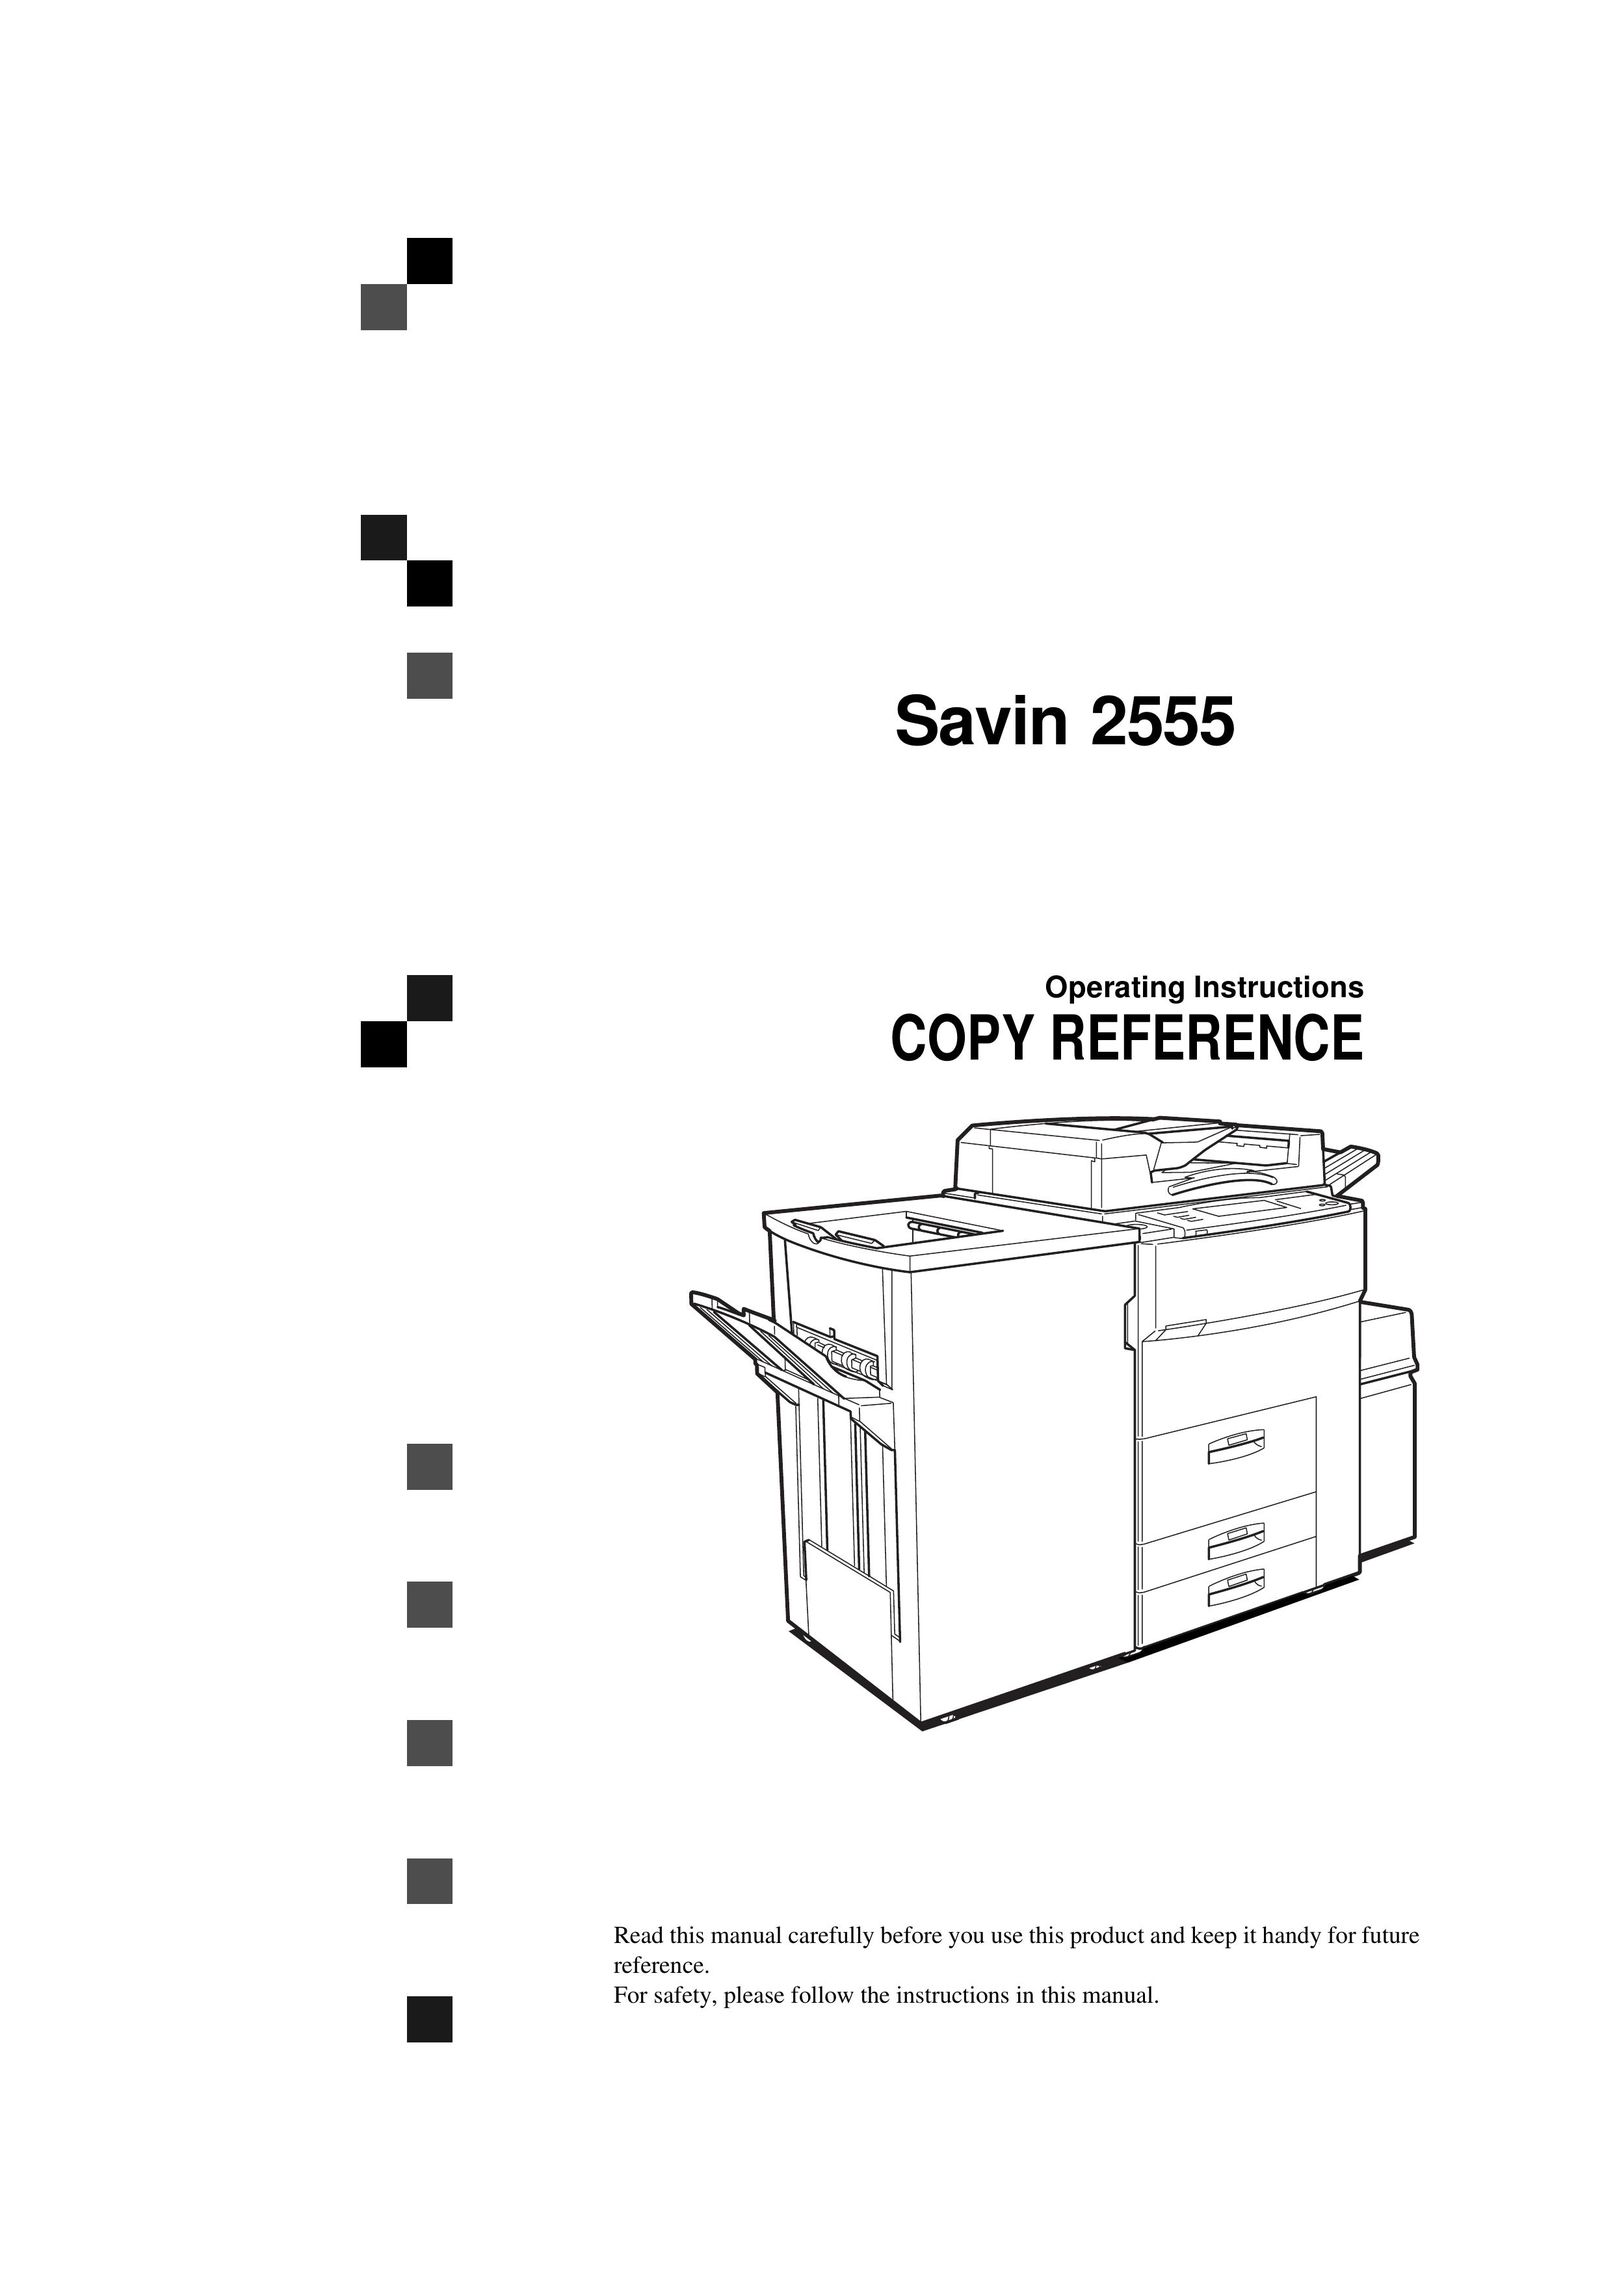 Savin 2555 All in One Printer User Manual